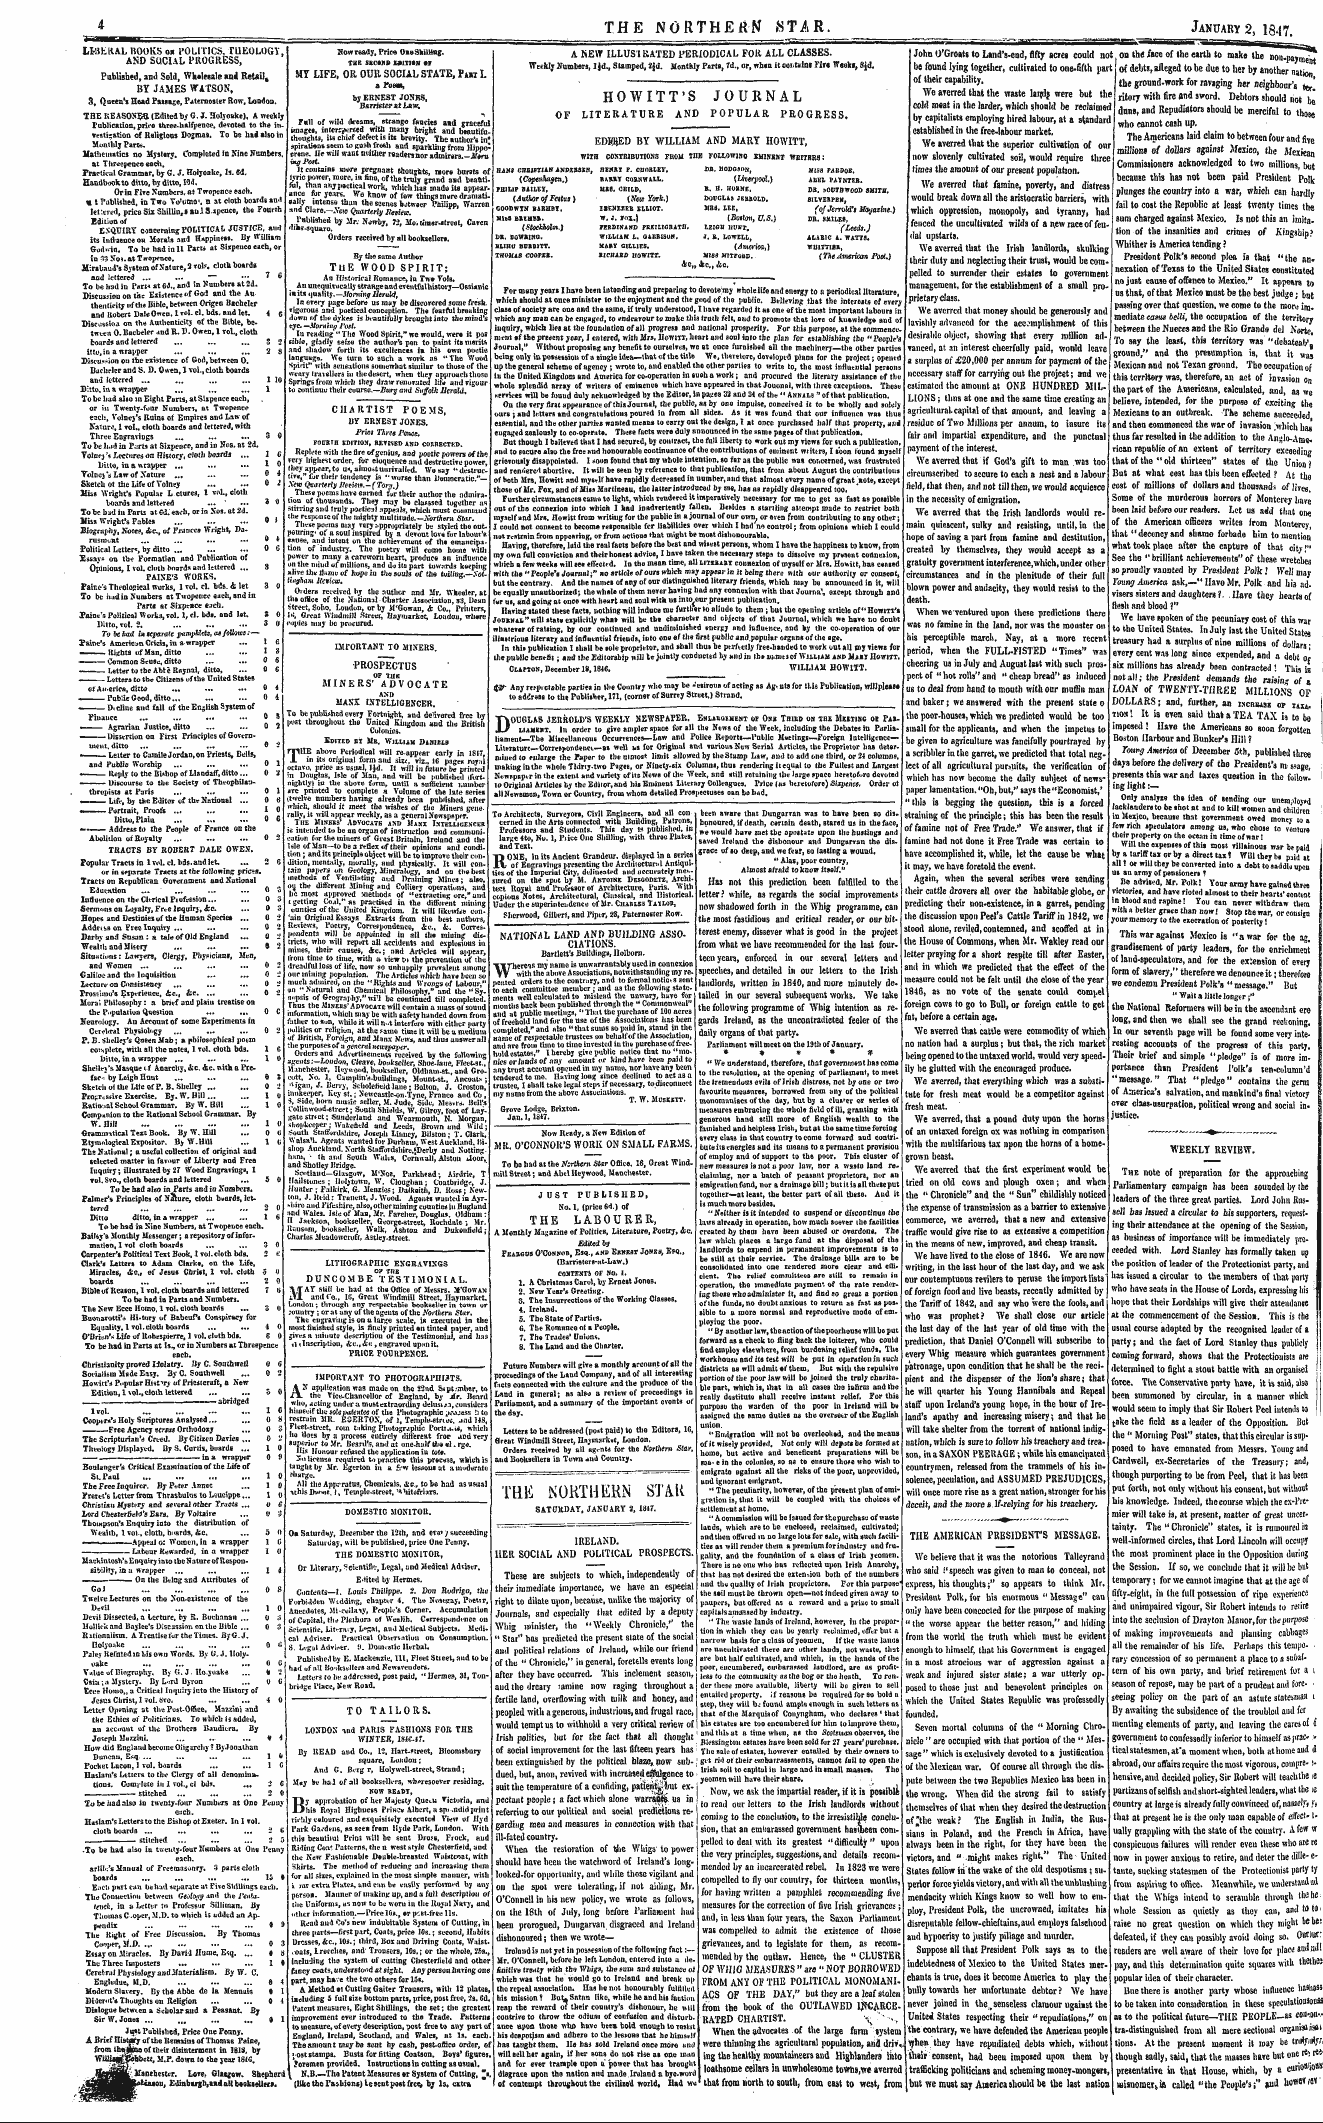 Northern Star (1837-1852): jS F Y, 3rd edition - Ad00406